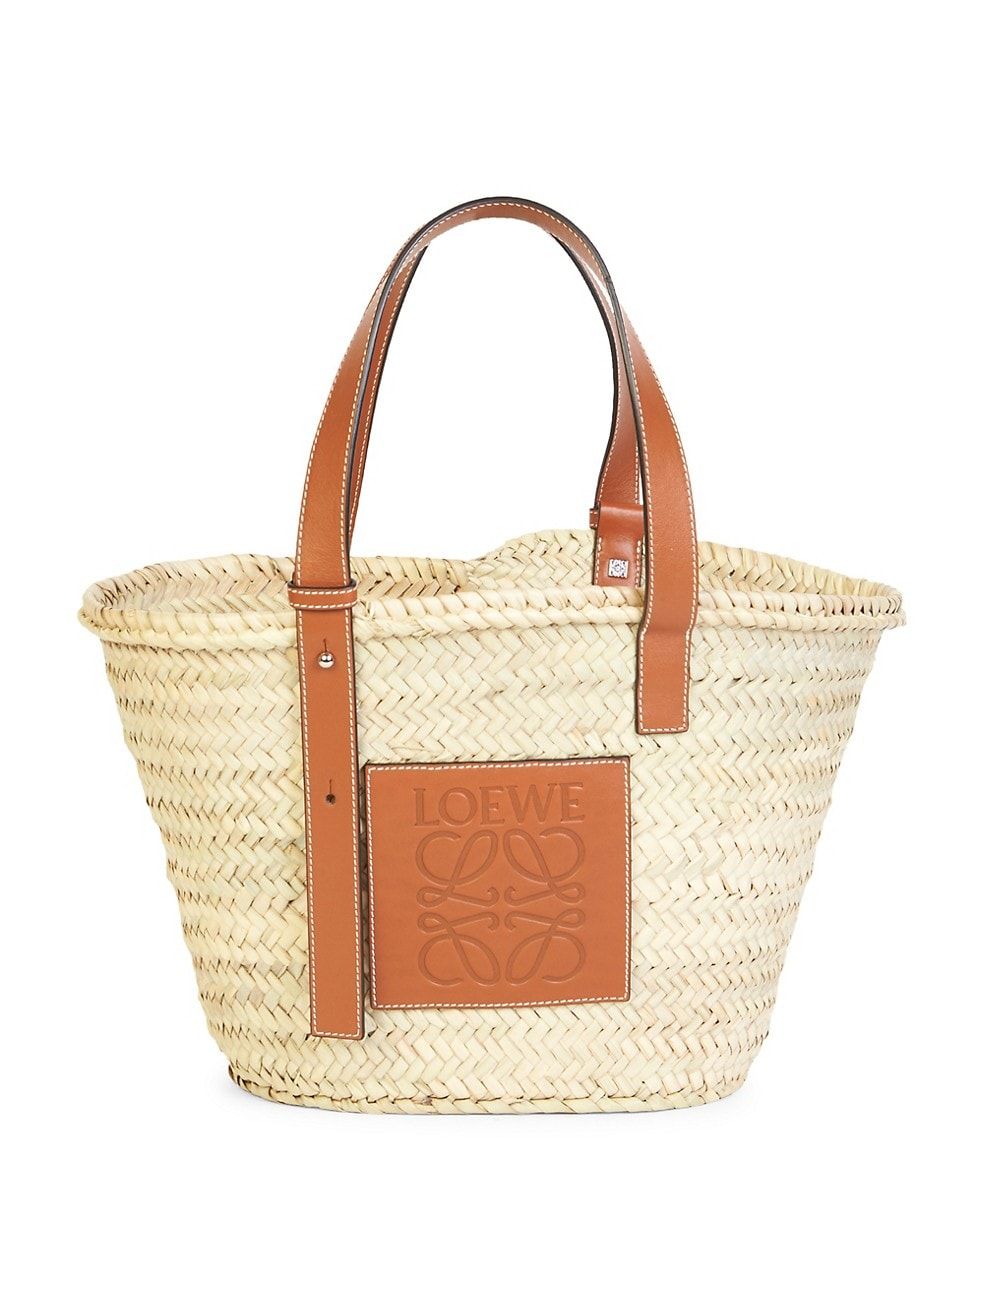 Loewe Medium Leather-Trimmed Woven Basket Bag | Saks Fifth Avenue